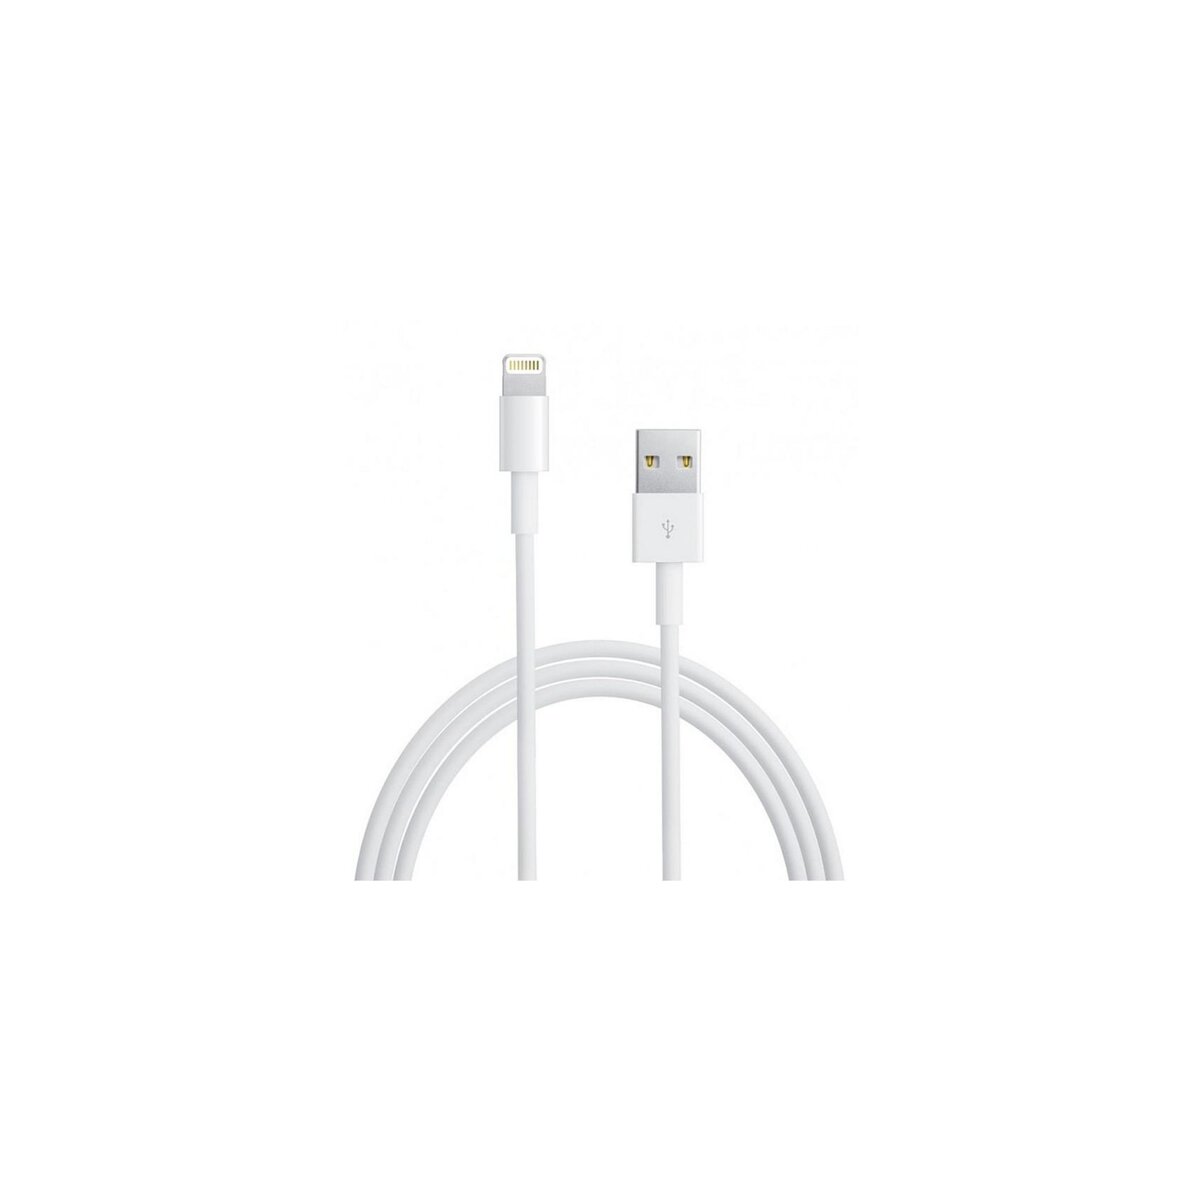  Câble 1 mètre pour iPhone 7/ 7 Plus avec prise Usb-Lightning origine Apple